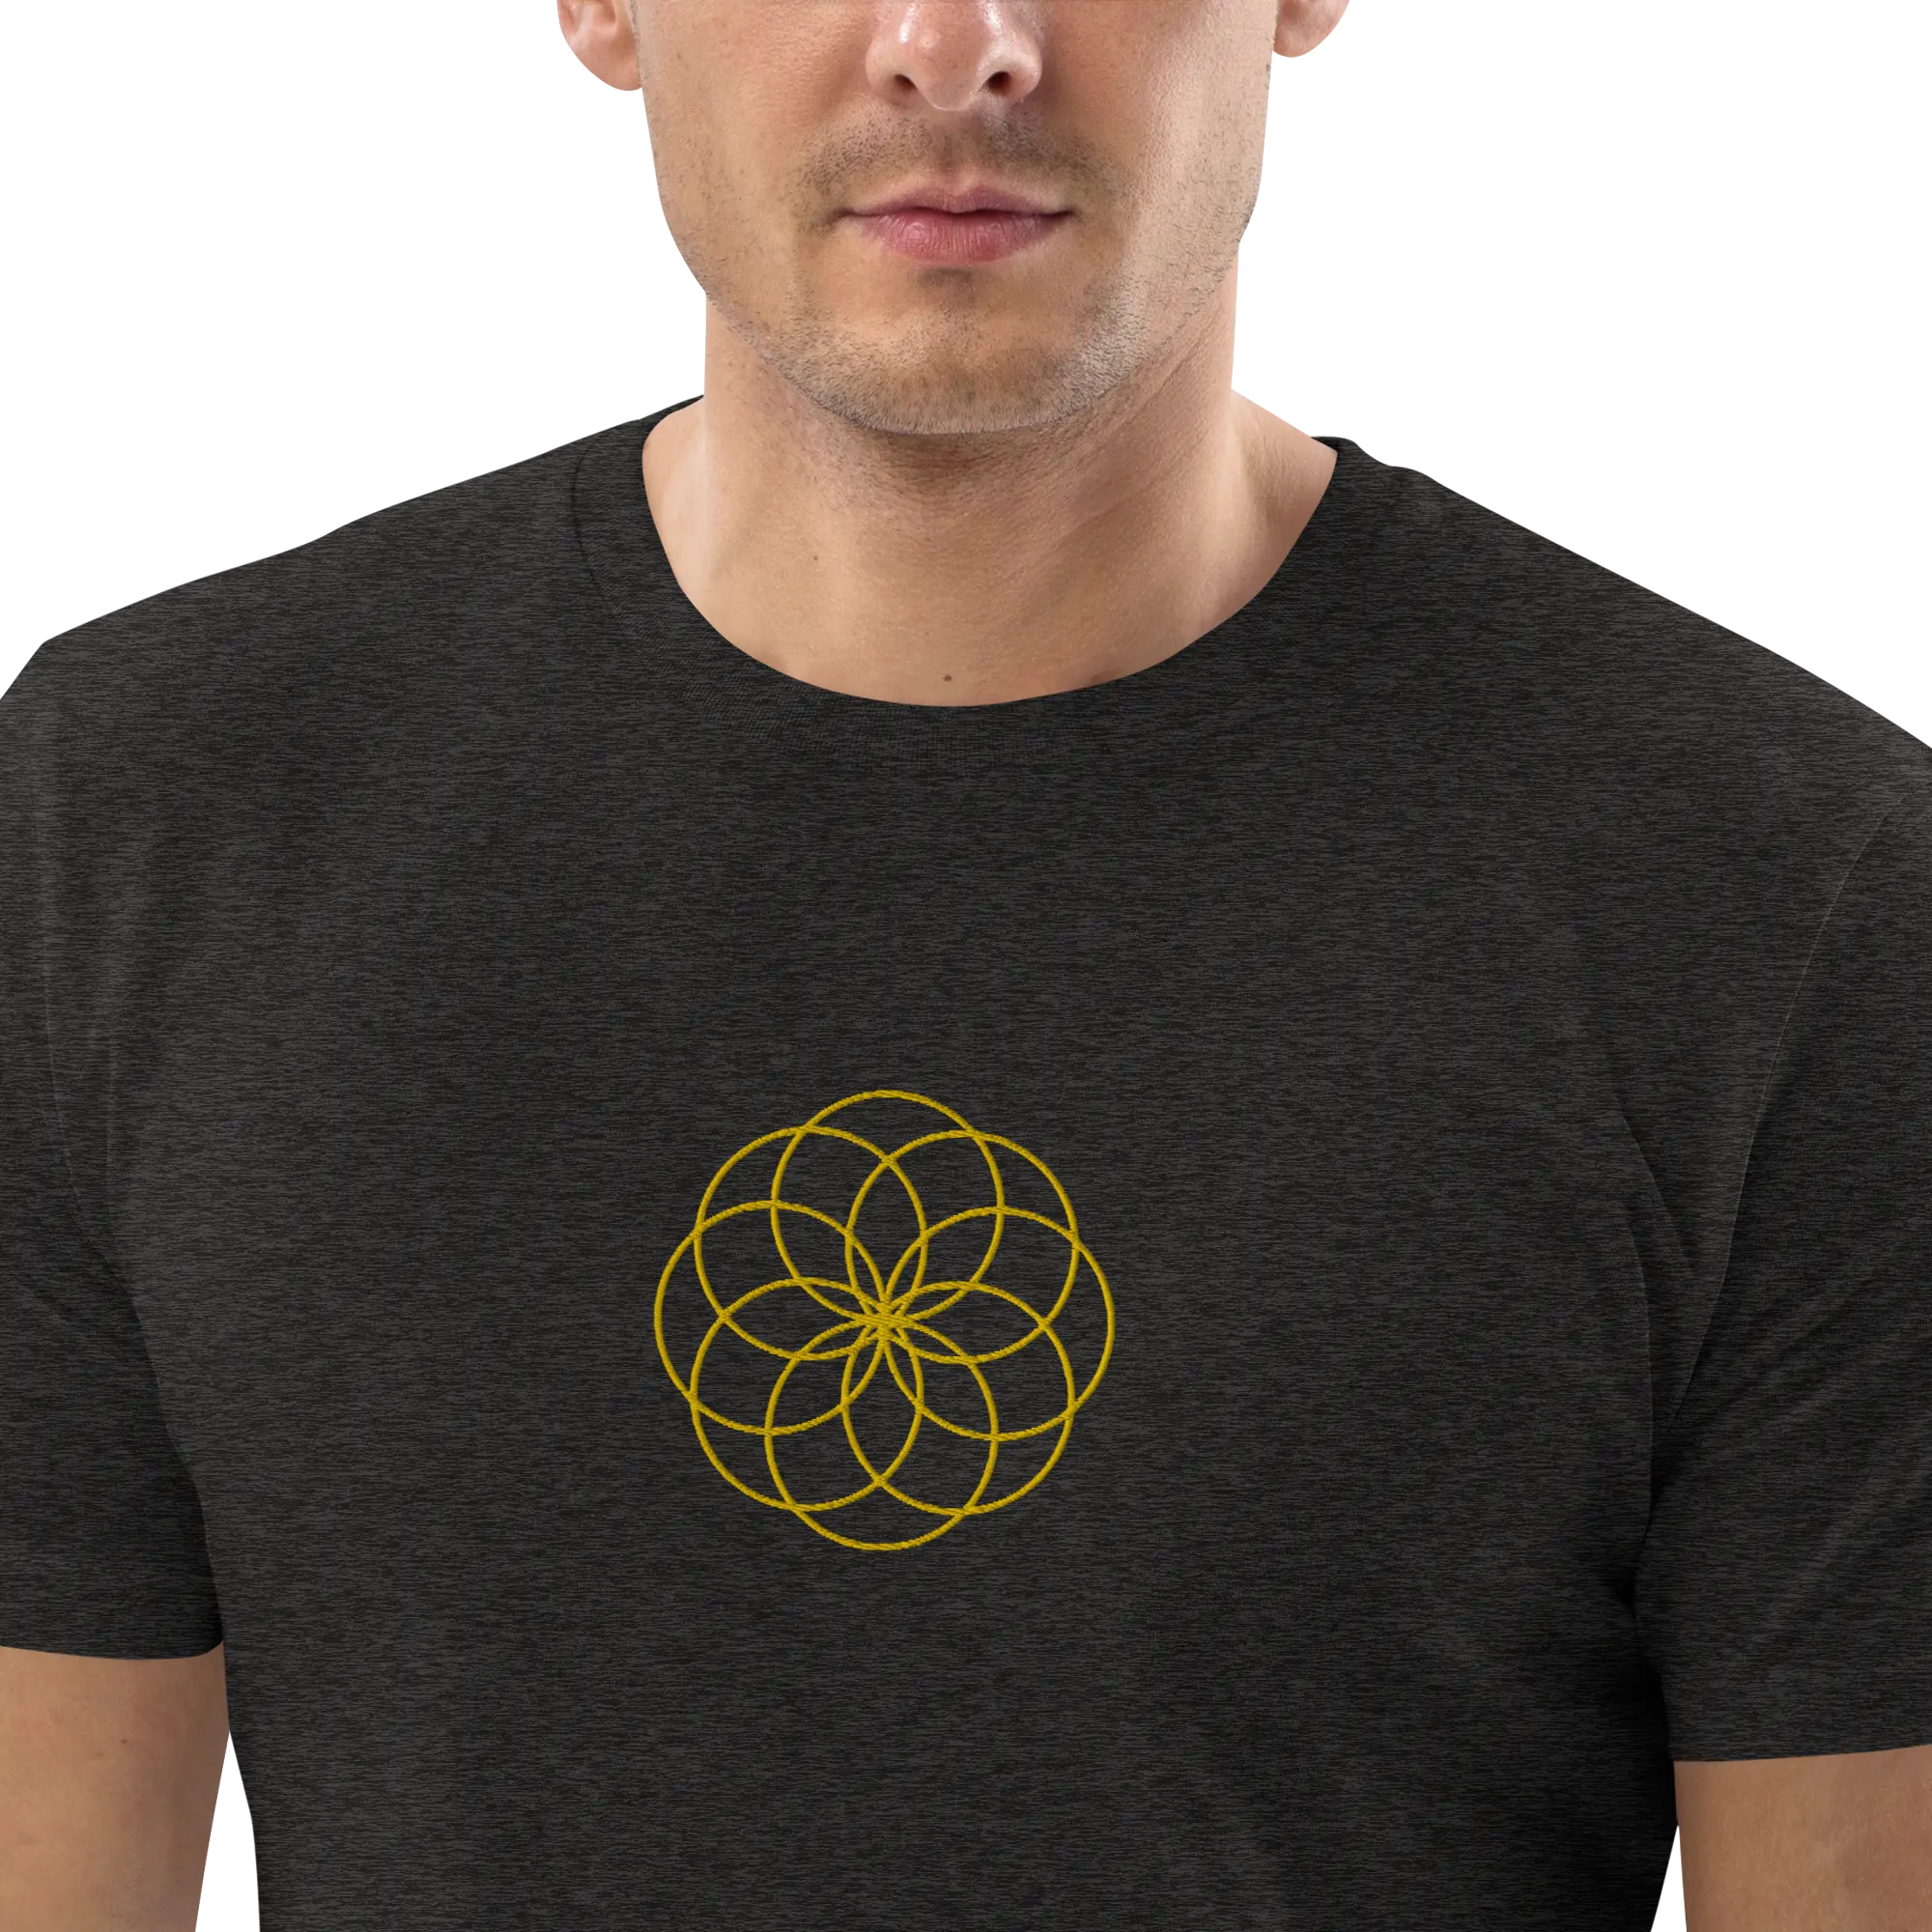 100% Organic Cotton ⋅ Gold Lotus of Life Embroidery ⋅ Men's T-Shirt ⋅ Black